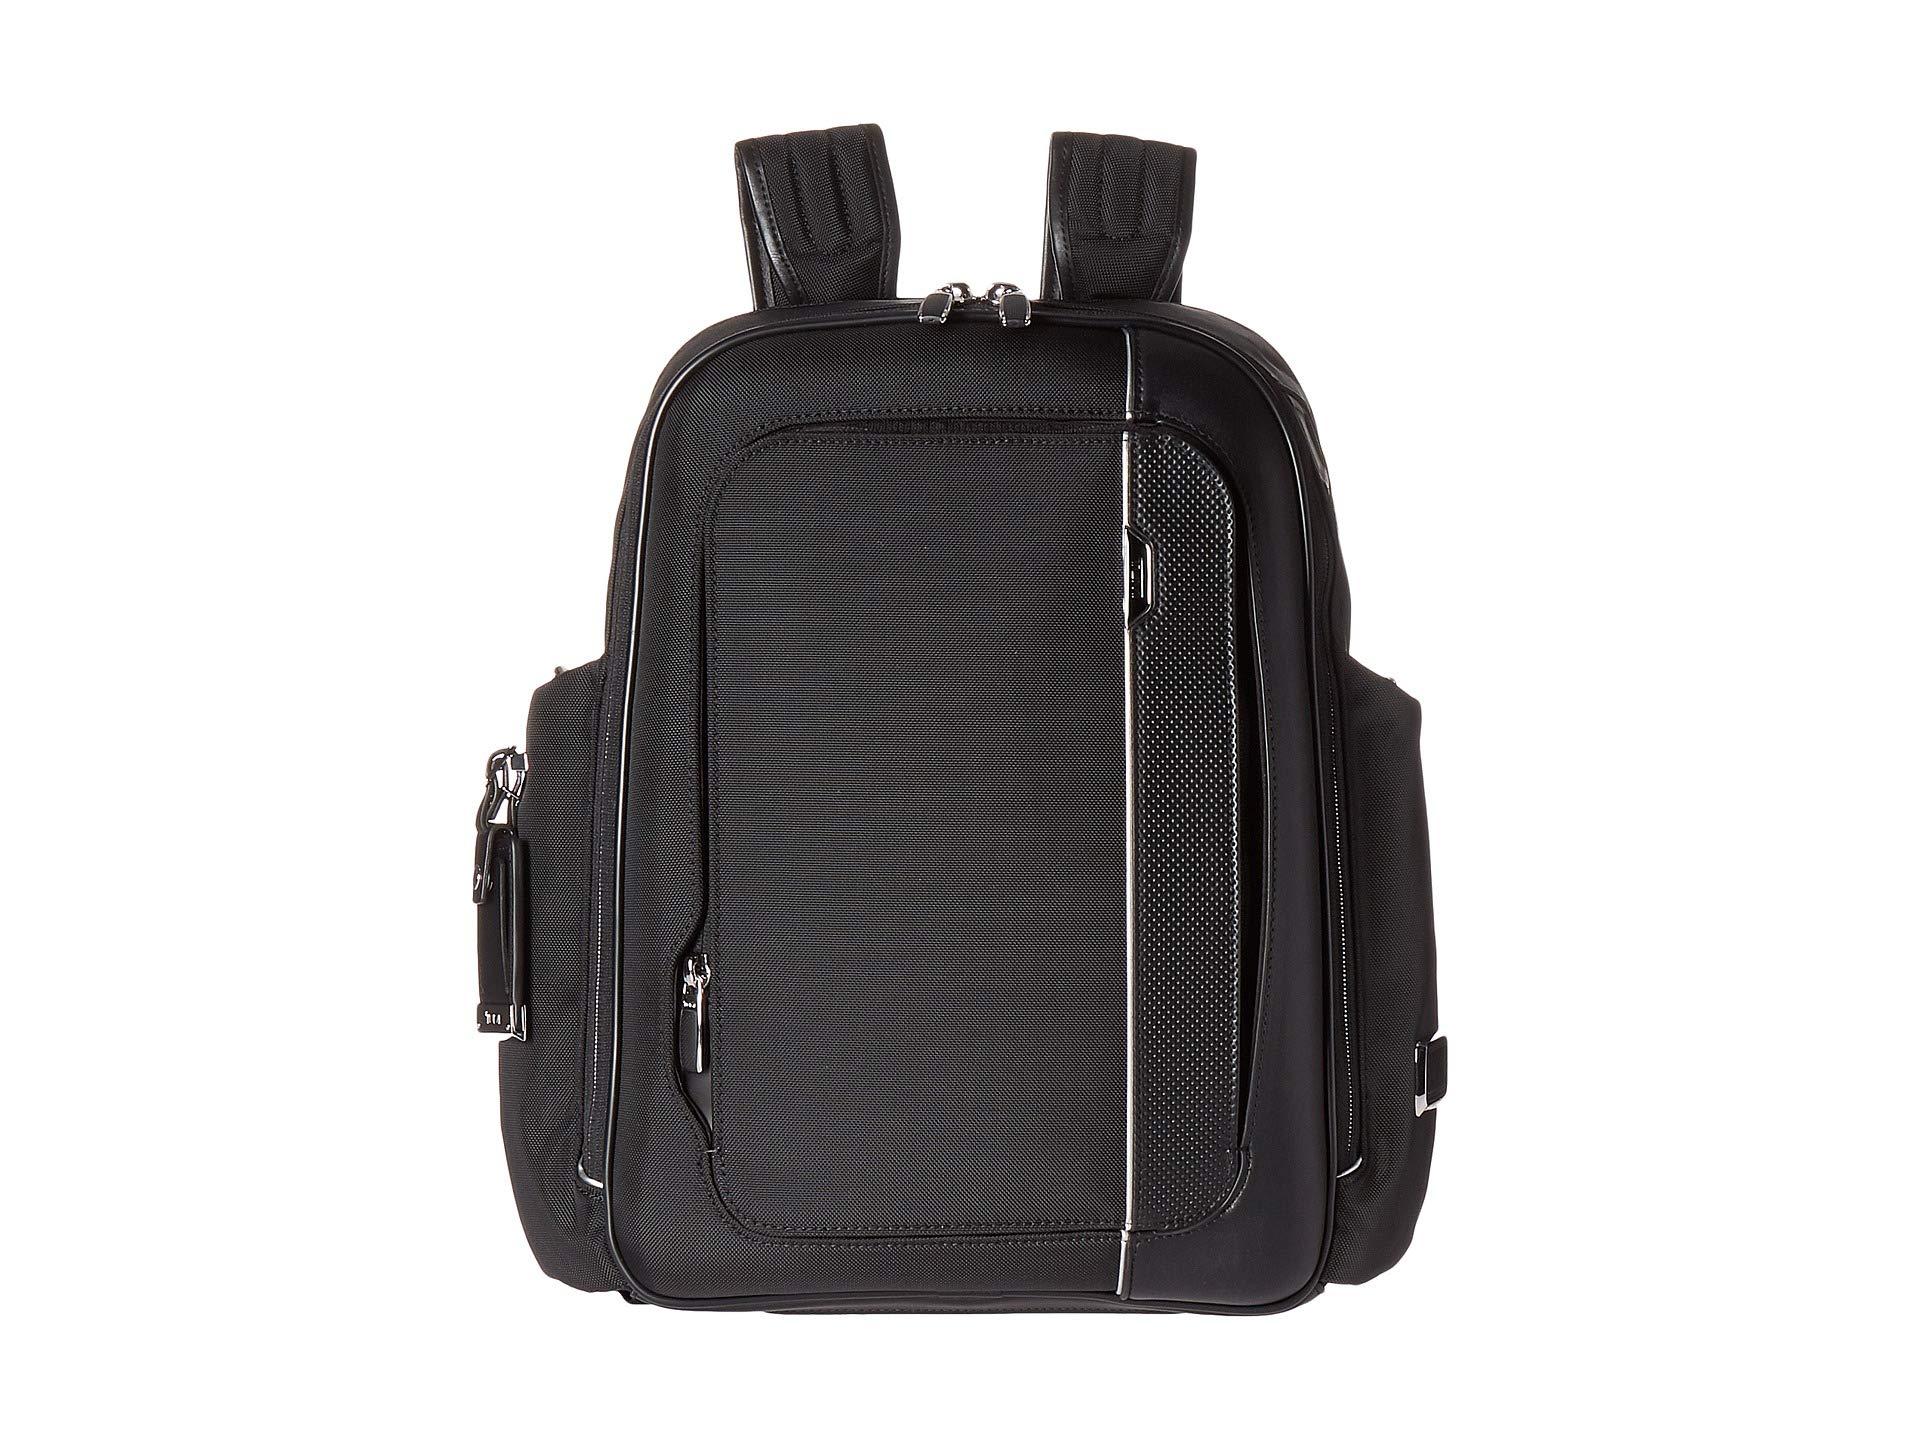 Tumi Leather Arrive Larson Backpack in Black for Men - Lyst